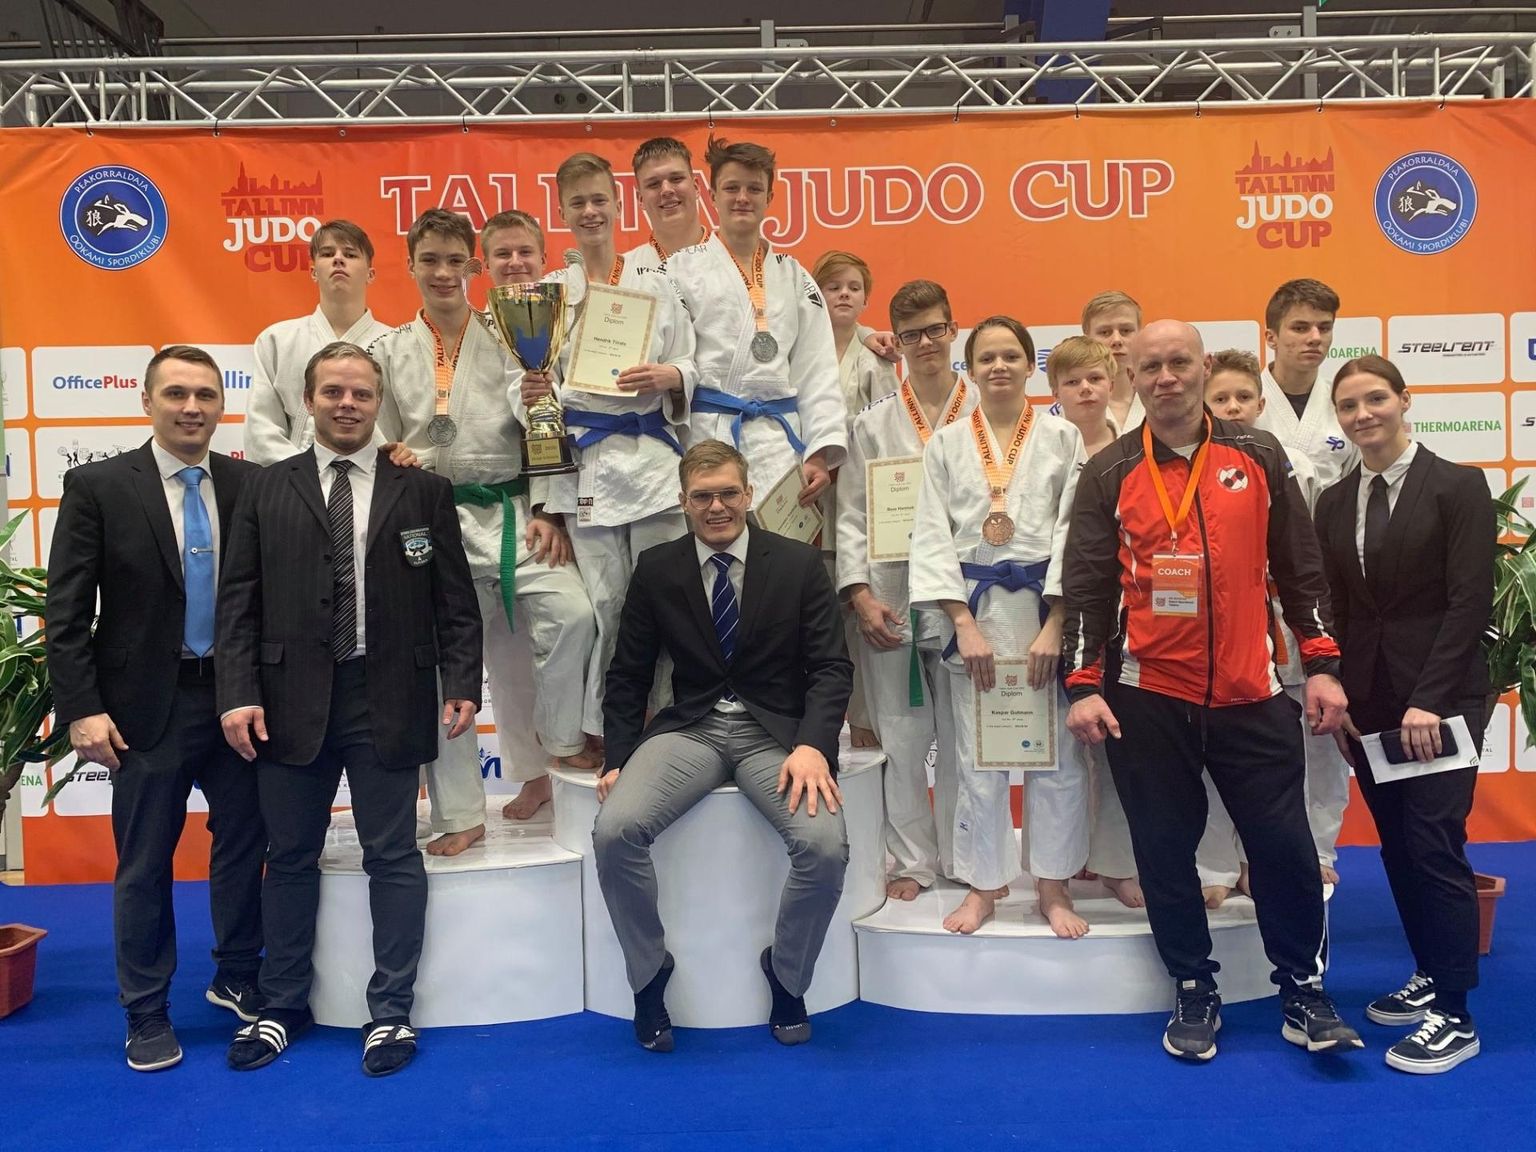 Tartu judoklubi Do tõi Tallinn Judo Cupi turniirilt koju 22 medalit ning parima klubi tiitli.